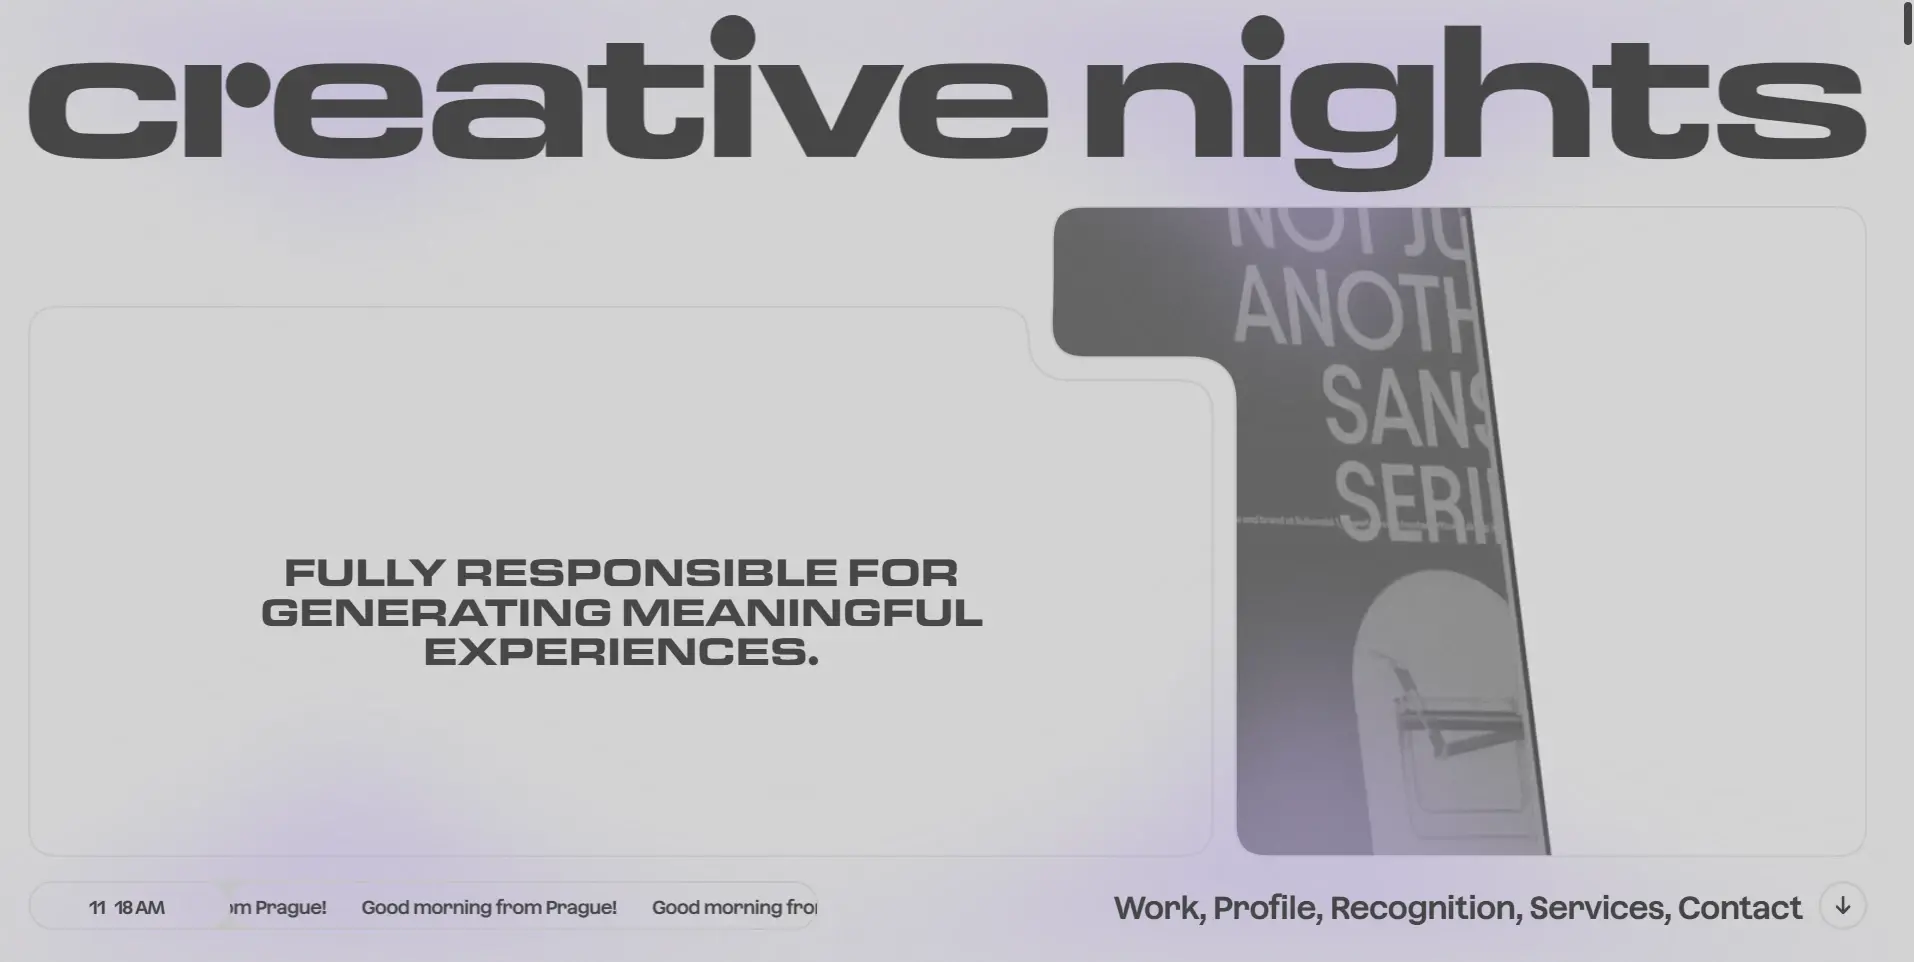 Blogduwebdesign graphisme inspiration portfolios designers creative nights